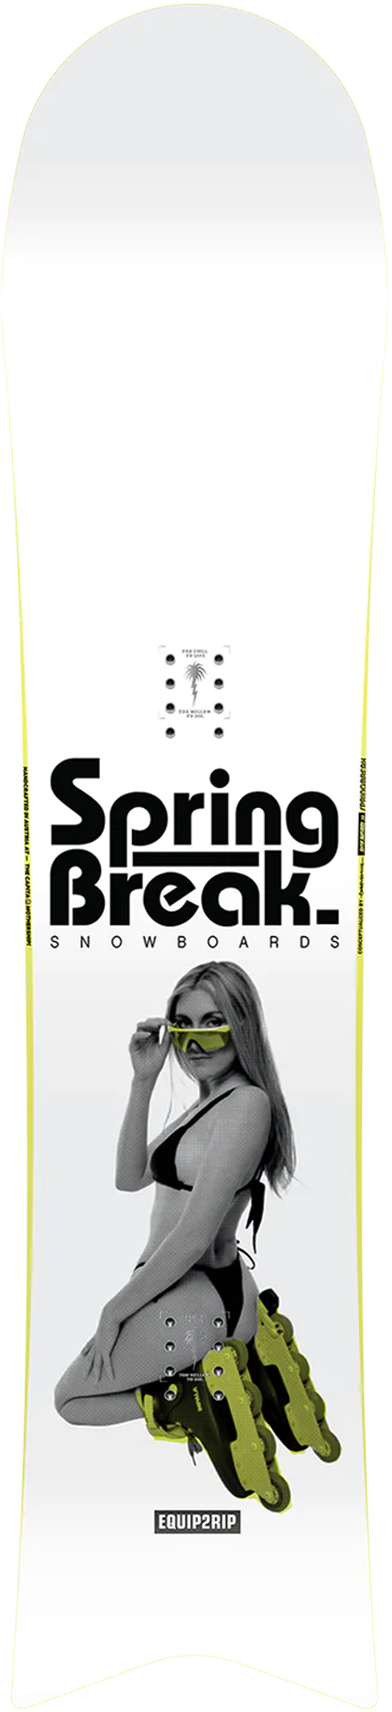 Snowboards – Spring Break Snowboards - Handcrafted Powder Snowboarding